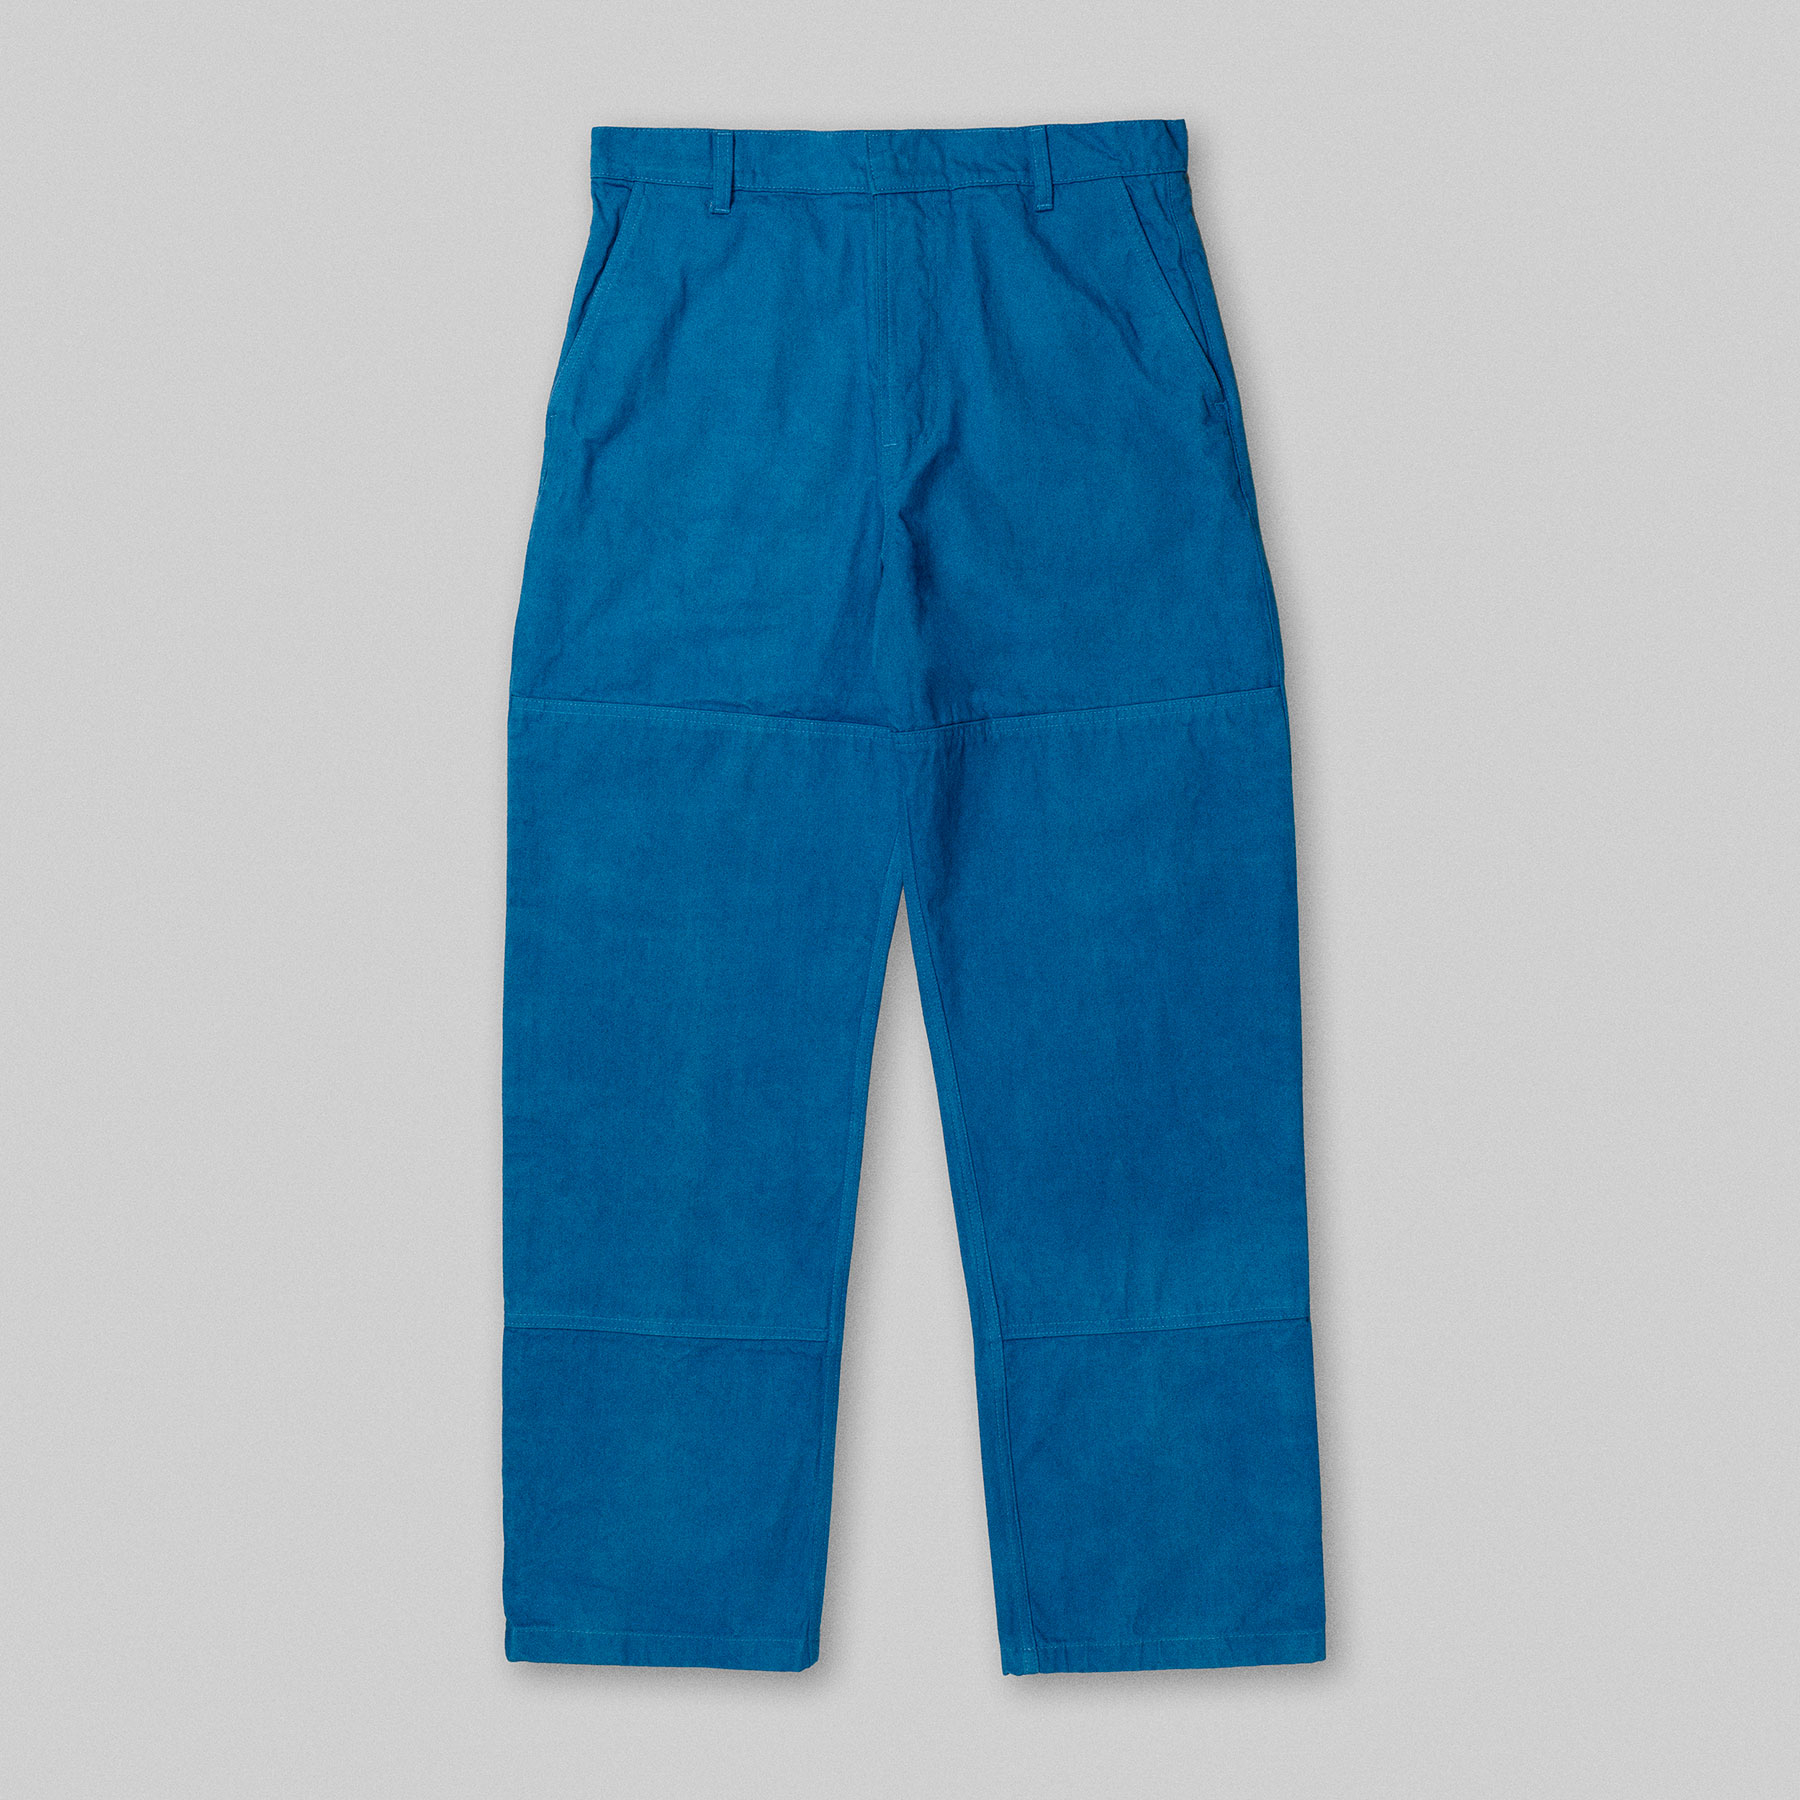 Pantalon 4 POCKET par Arpenteur en coloris Pastel moyen